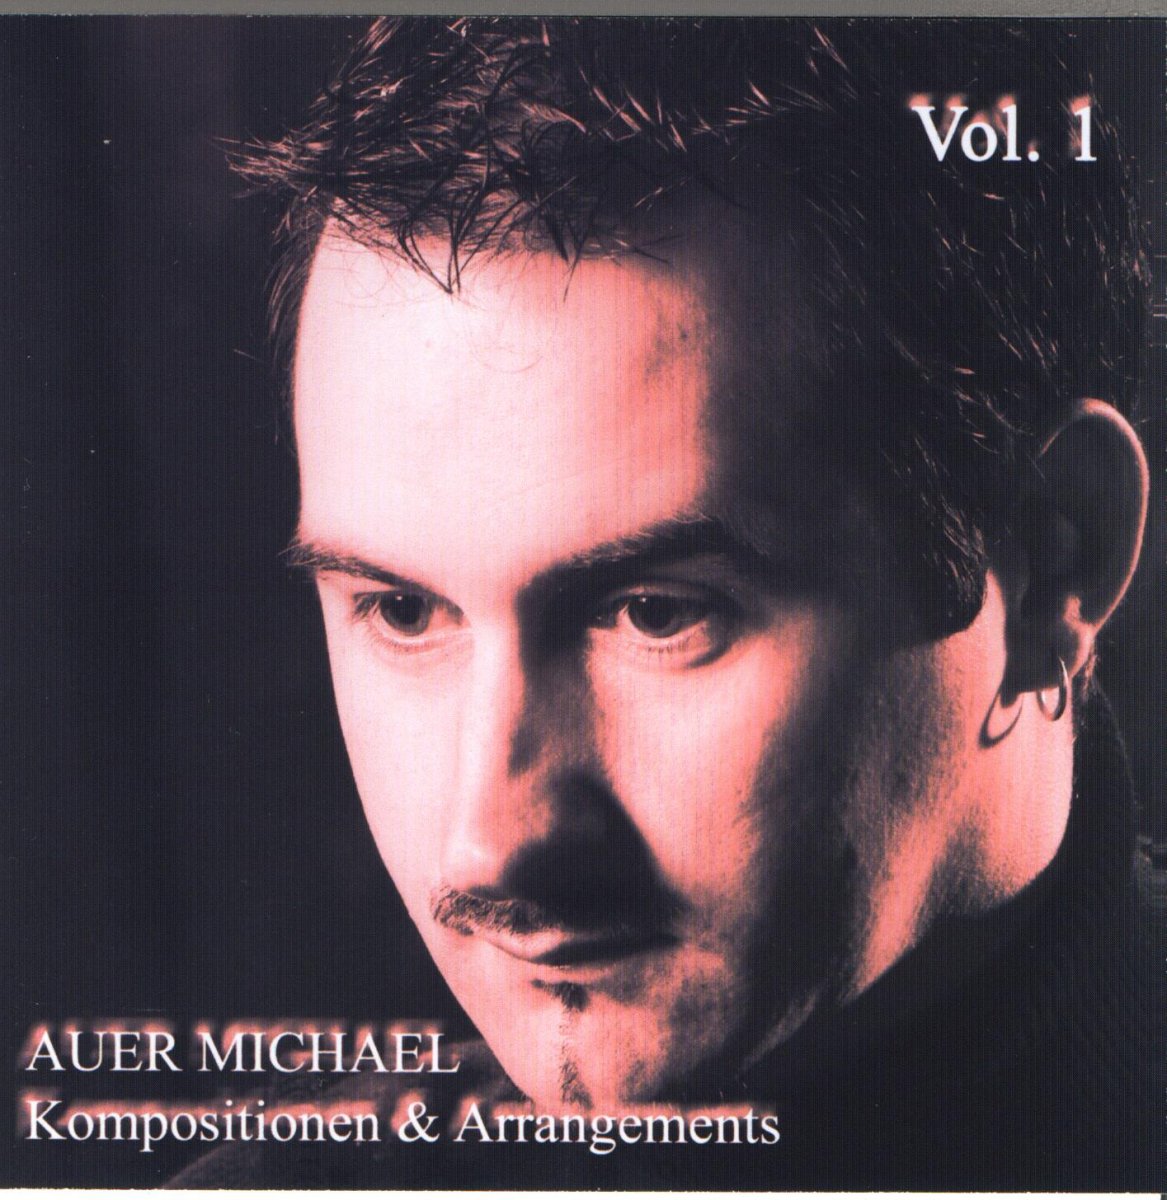 Auer Michael: Kompositionen und Arrangements #1 - hacer clic aqu